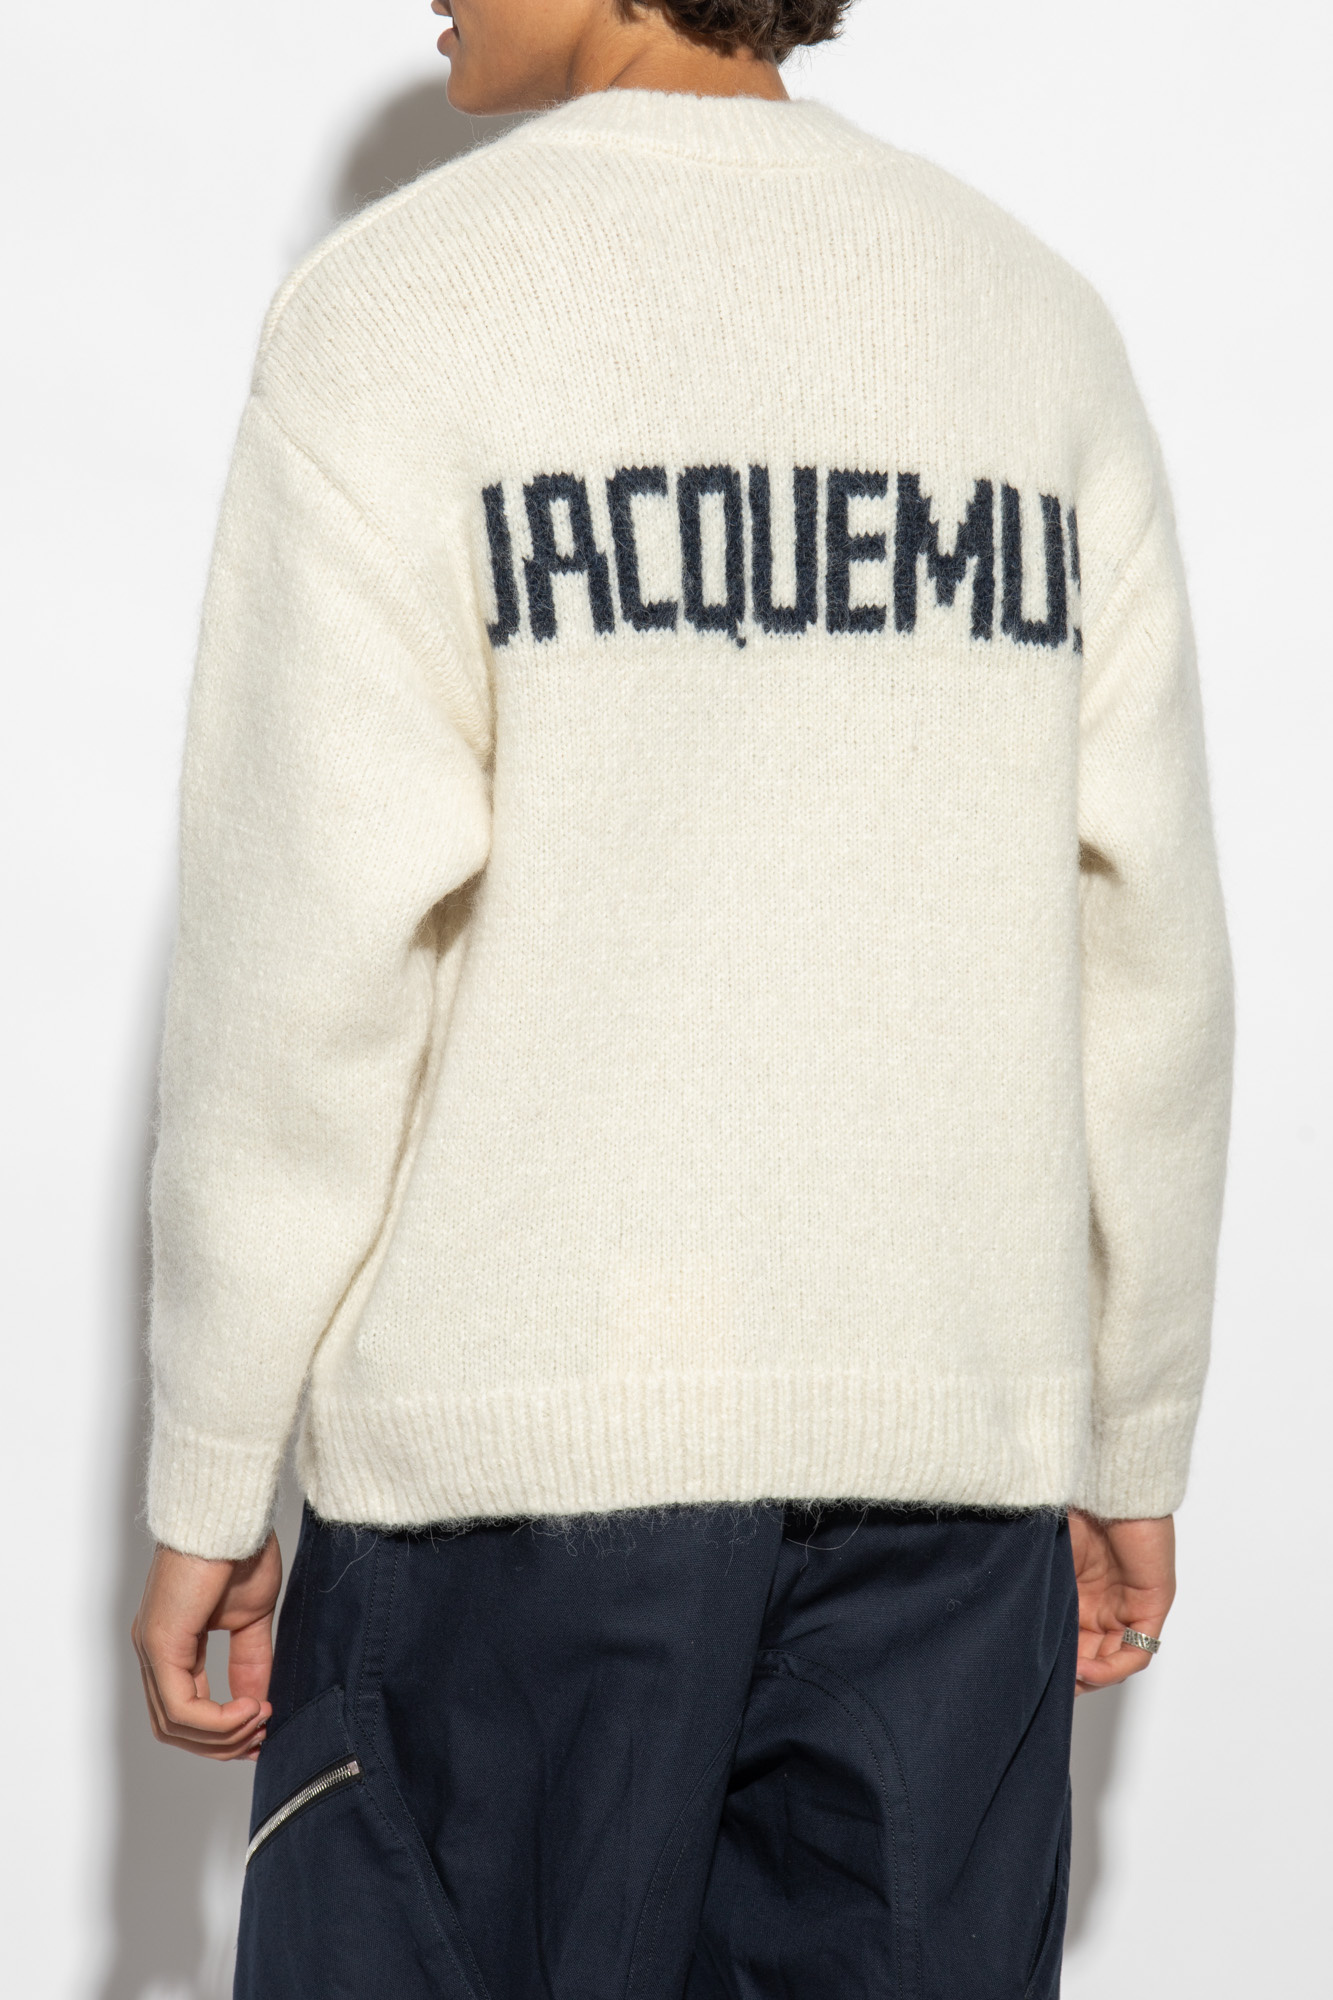 Jacquemus ‘Pavane’ shirt sweater